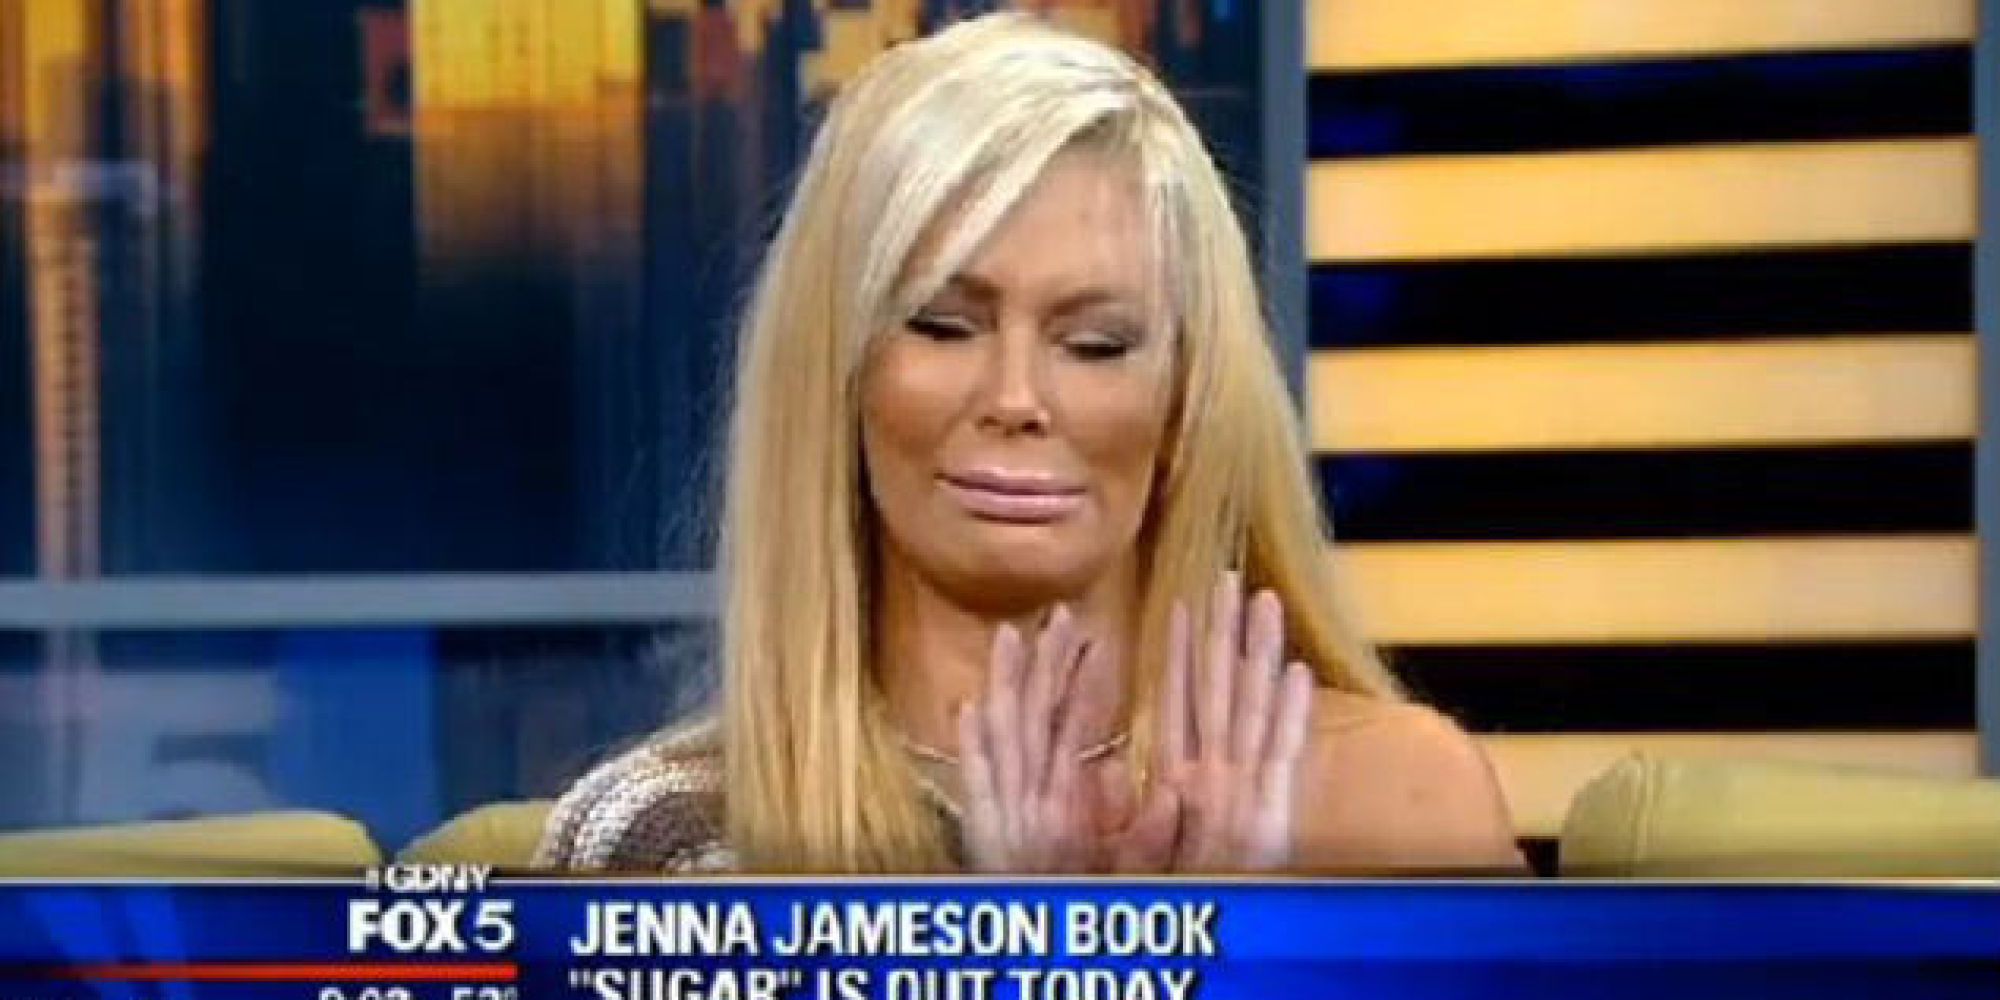 Jenna Jameson Tv Interview Cut Short Over Bizarre Behavior And Slurred Words Huffpost